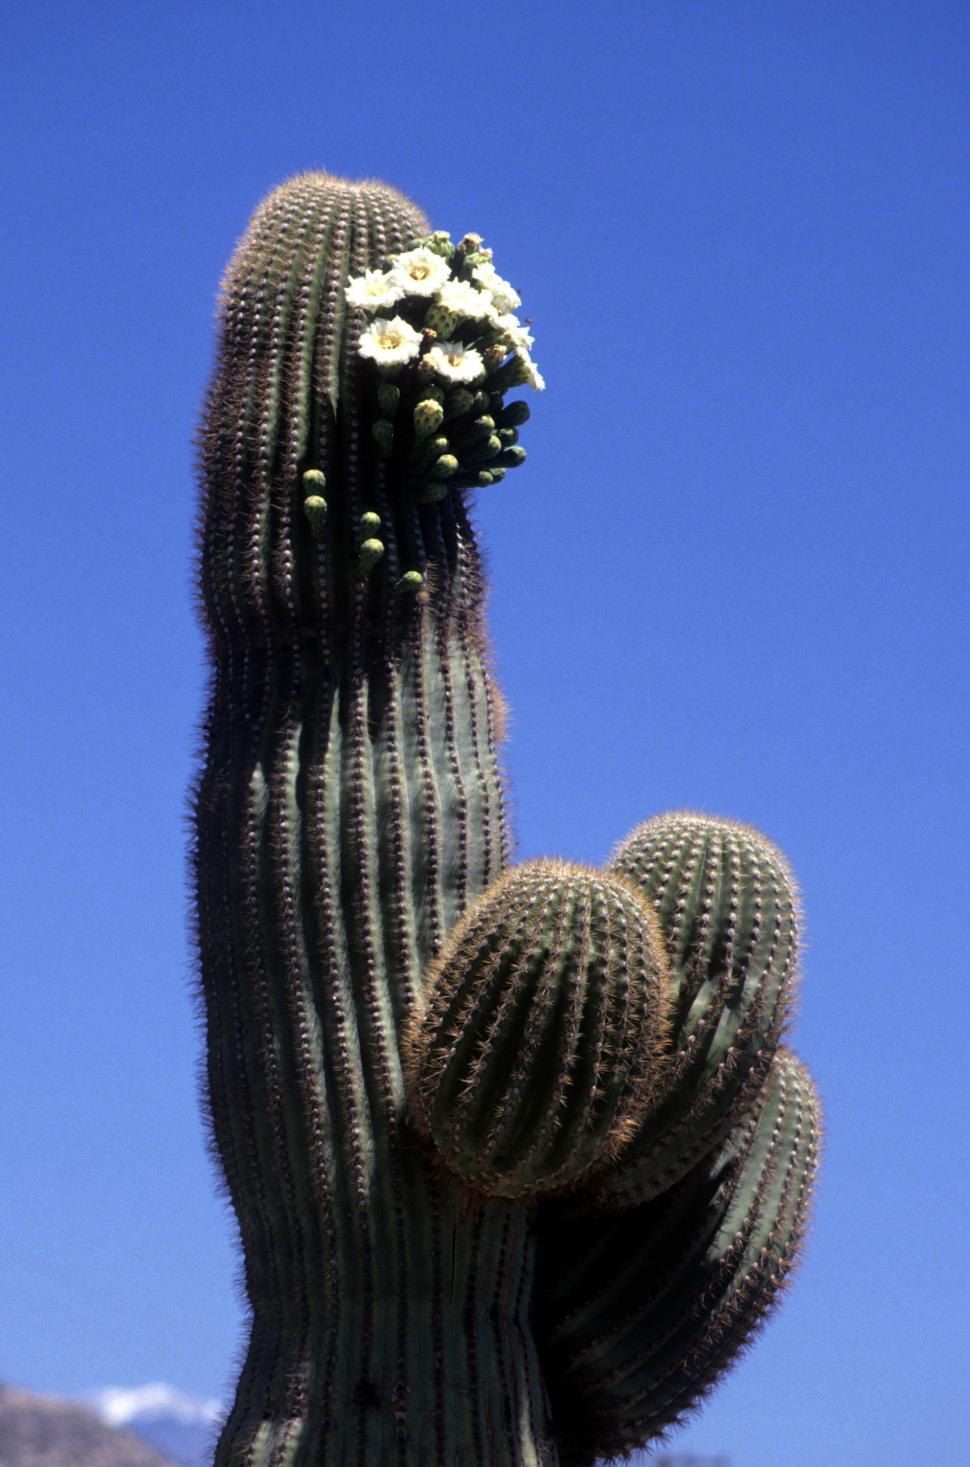 Free Image of Saguaro cactus 